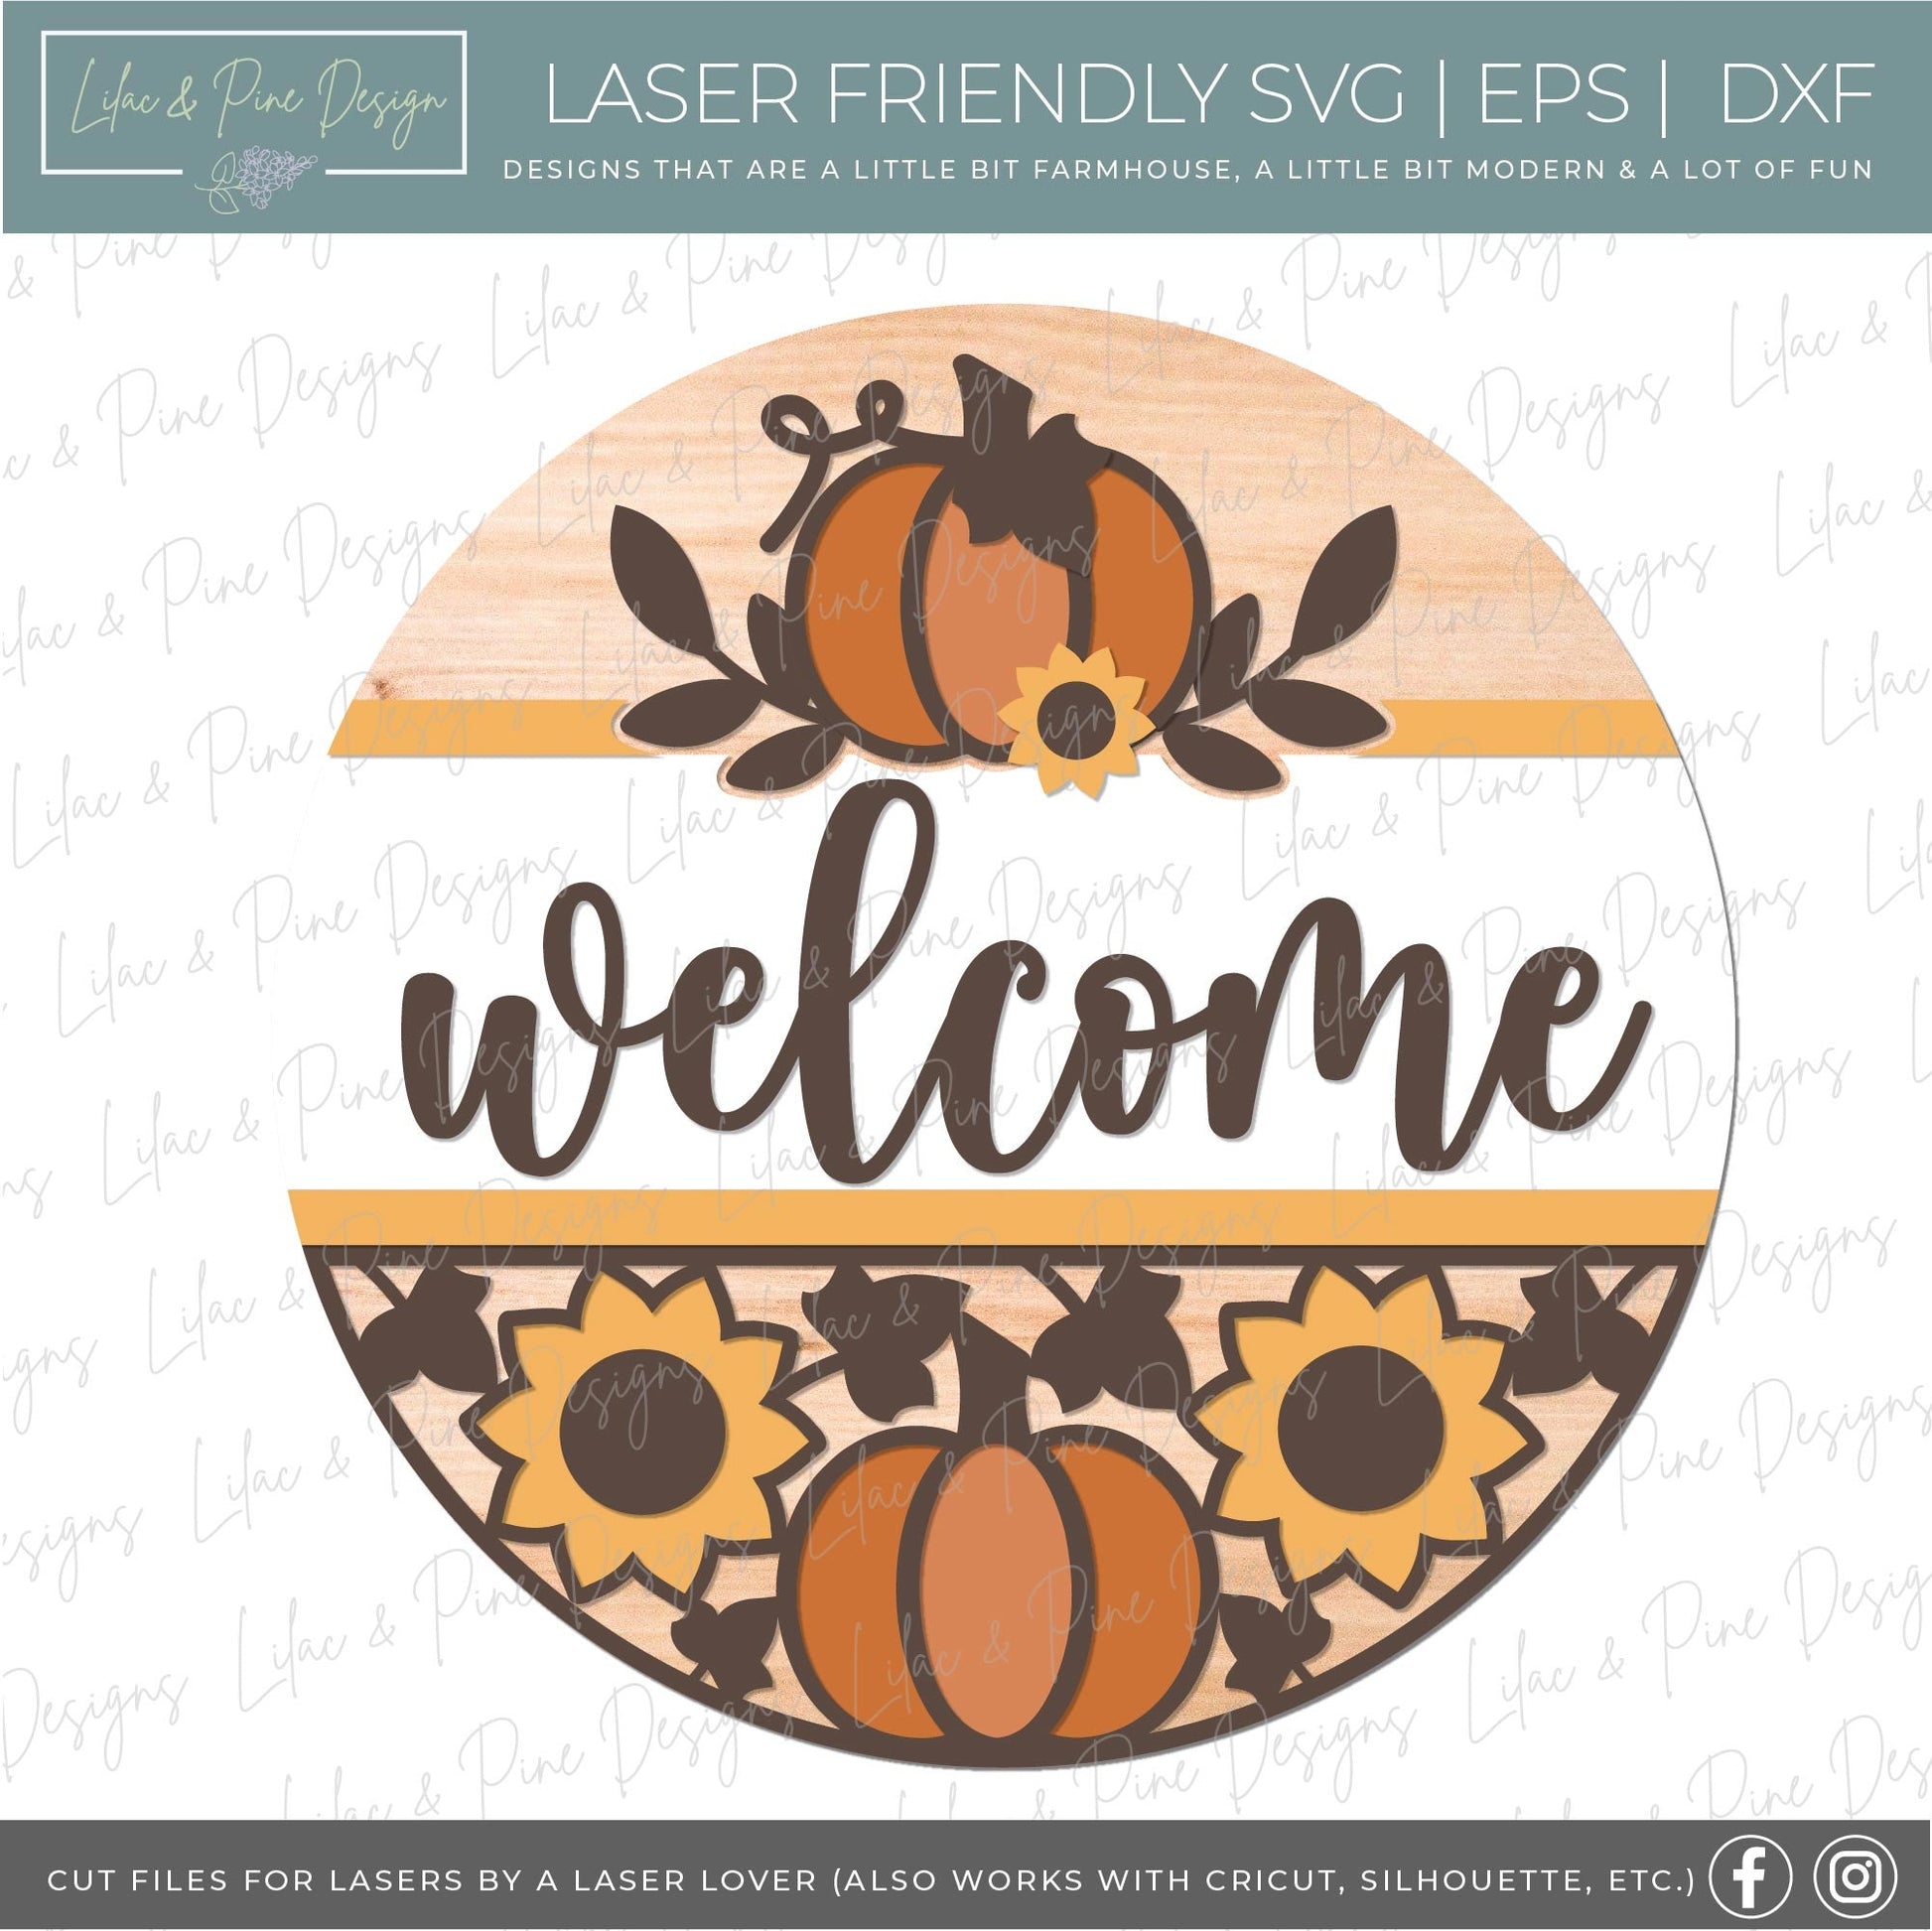 Fall door hanger SVG, Pumpkin welcome sign, Sunflower door hanger SVG, fall porch decor, autumn sign, Glowforge SVG, laser cut file